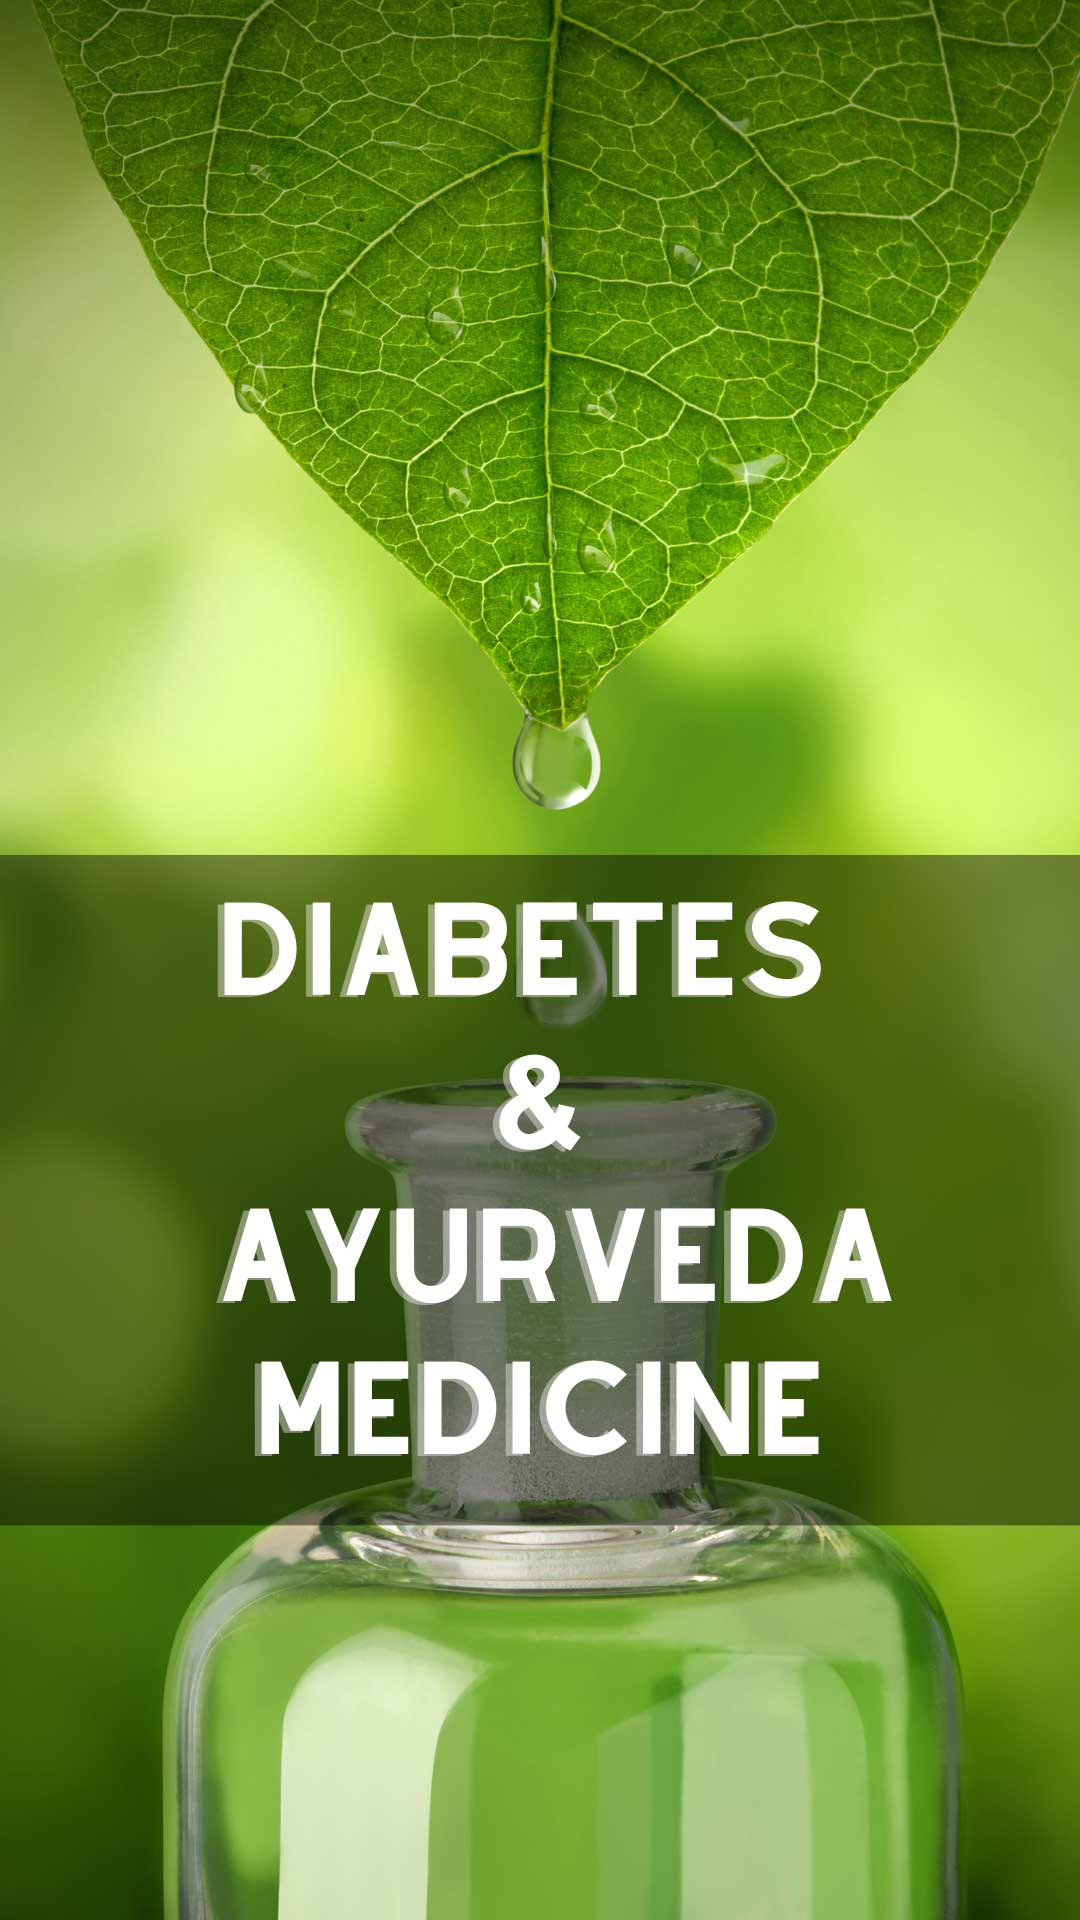 Diabetes & Ayurvedic Medicine